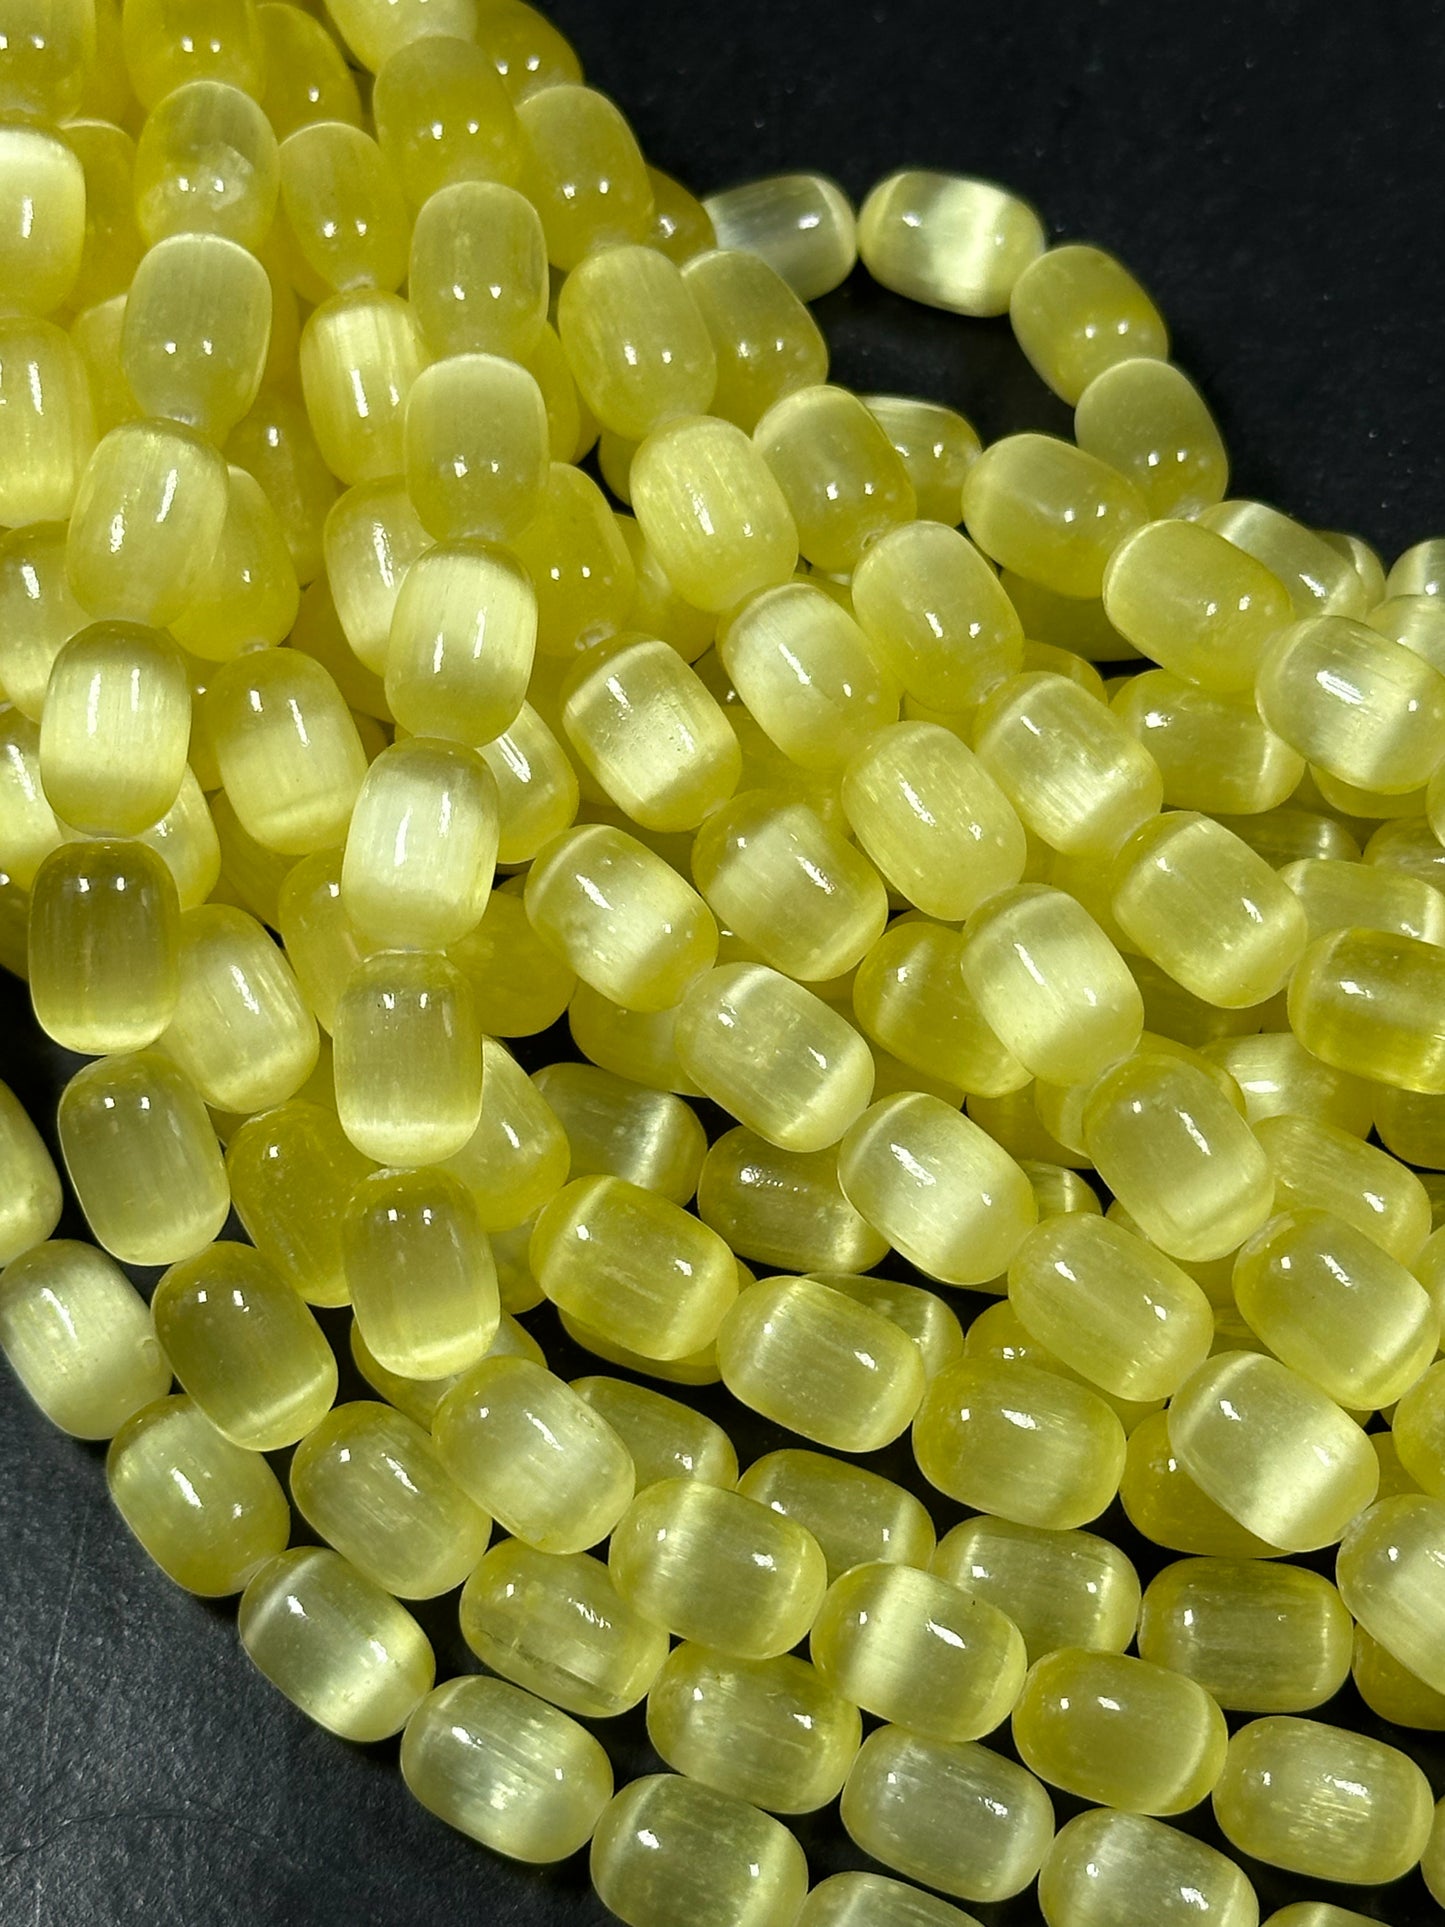 Natural Yellow Selenite Gemstone Bead 12x8mm Tube Shape Bead, Beautiful Yellow Color Selenite Gemstone Bead, Great Quality Full Strand 15.5"